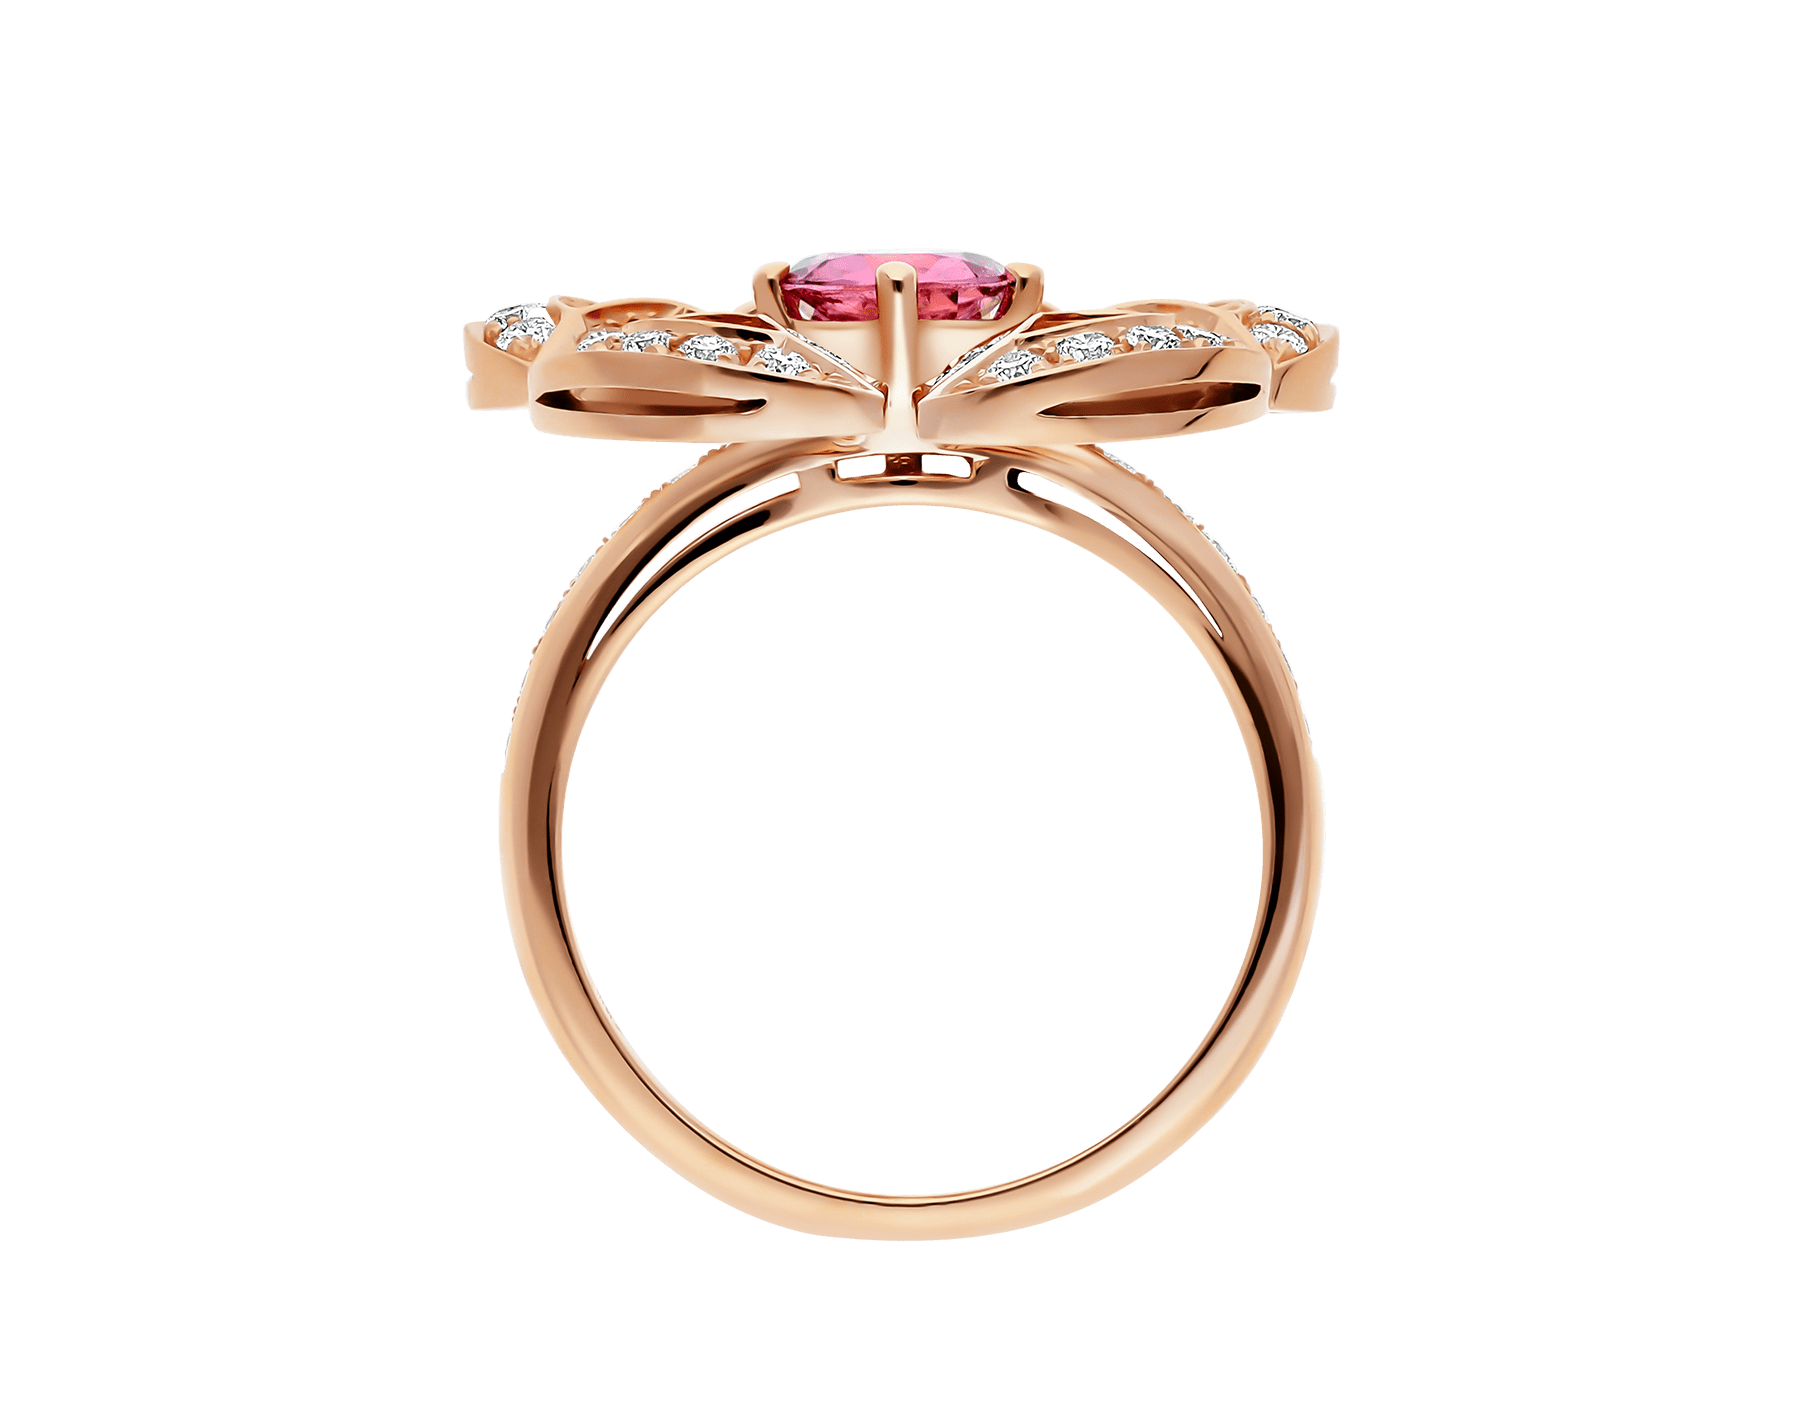 bvlgari oval diamond ring